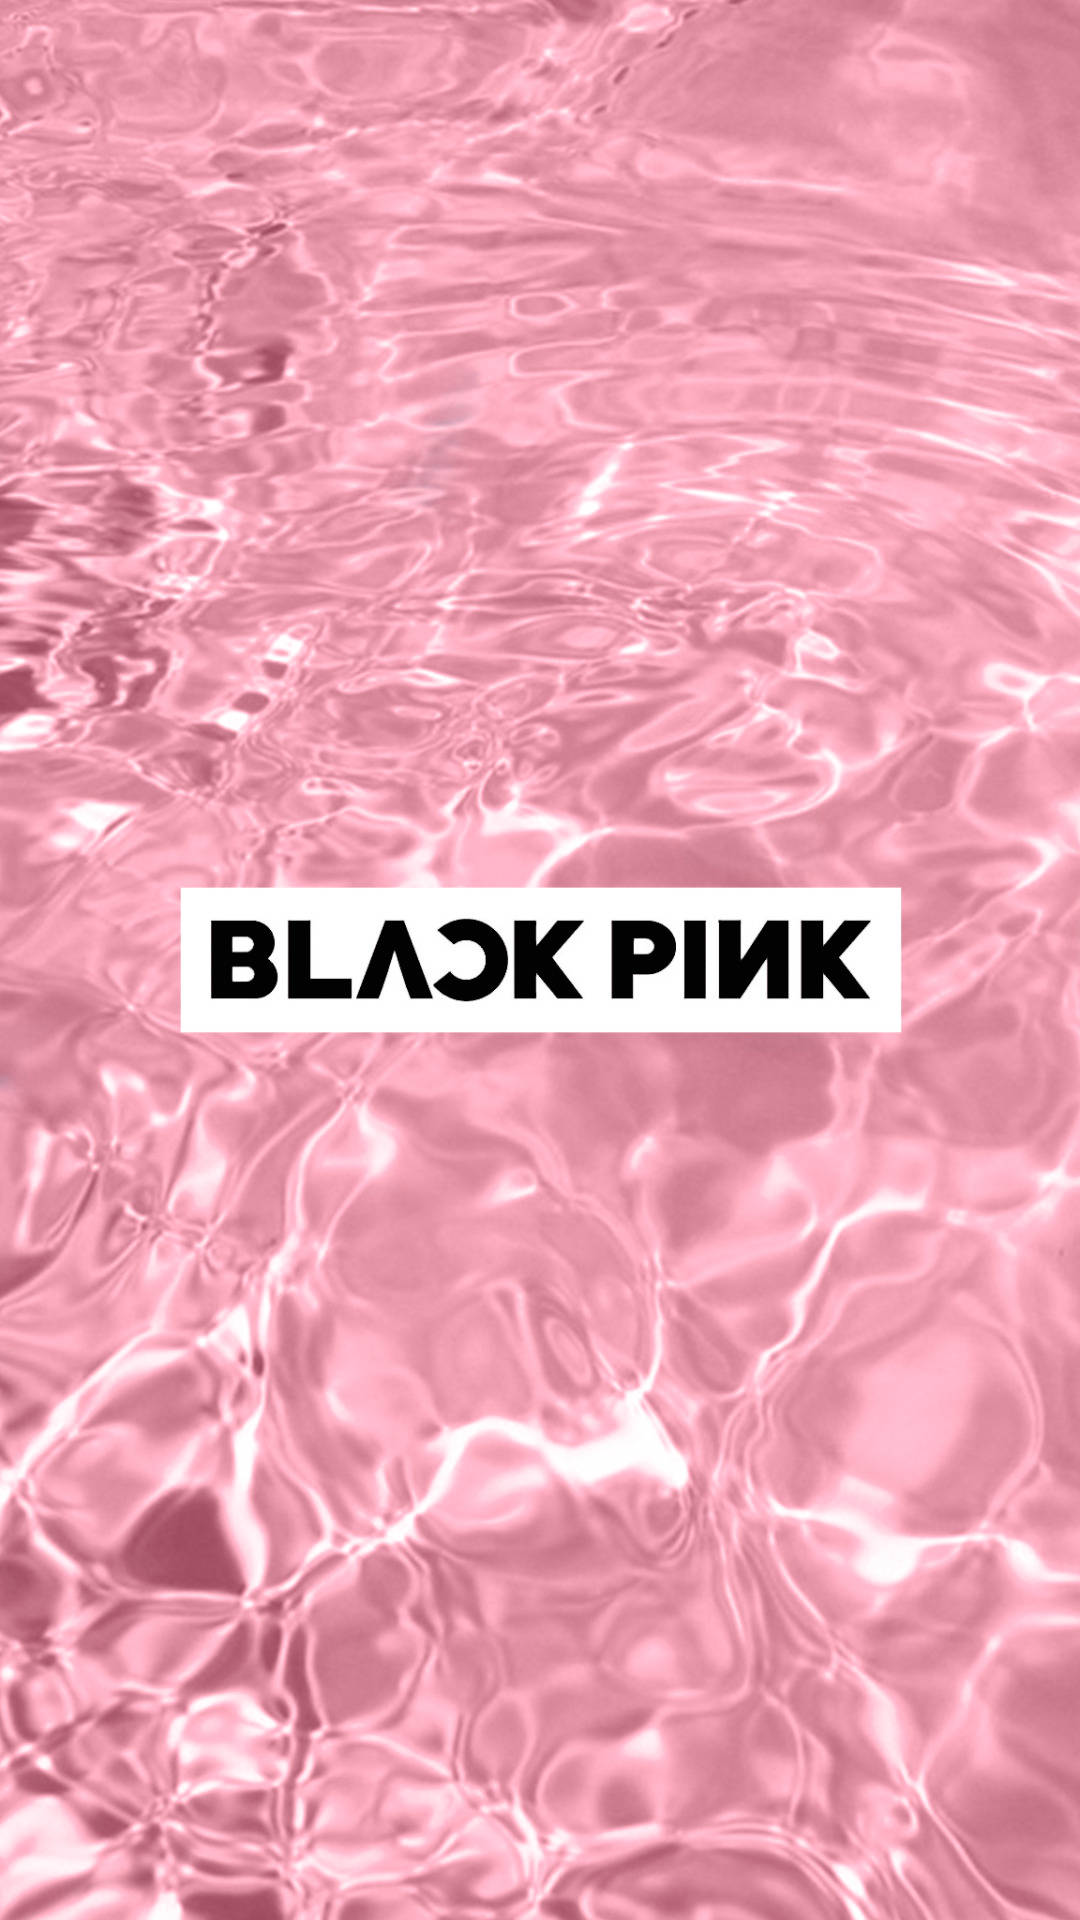 Blackpink Logo On Pink Water Background